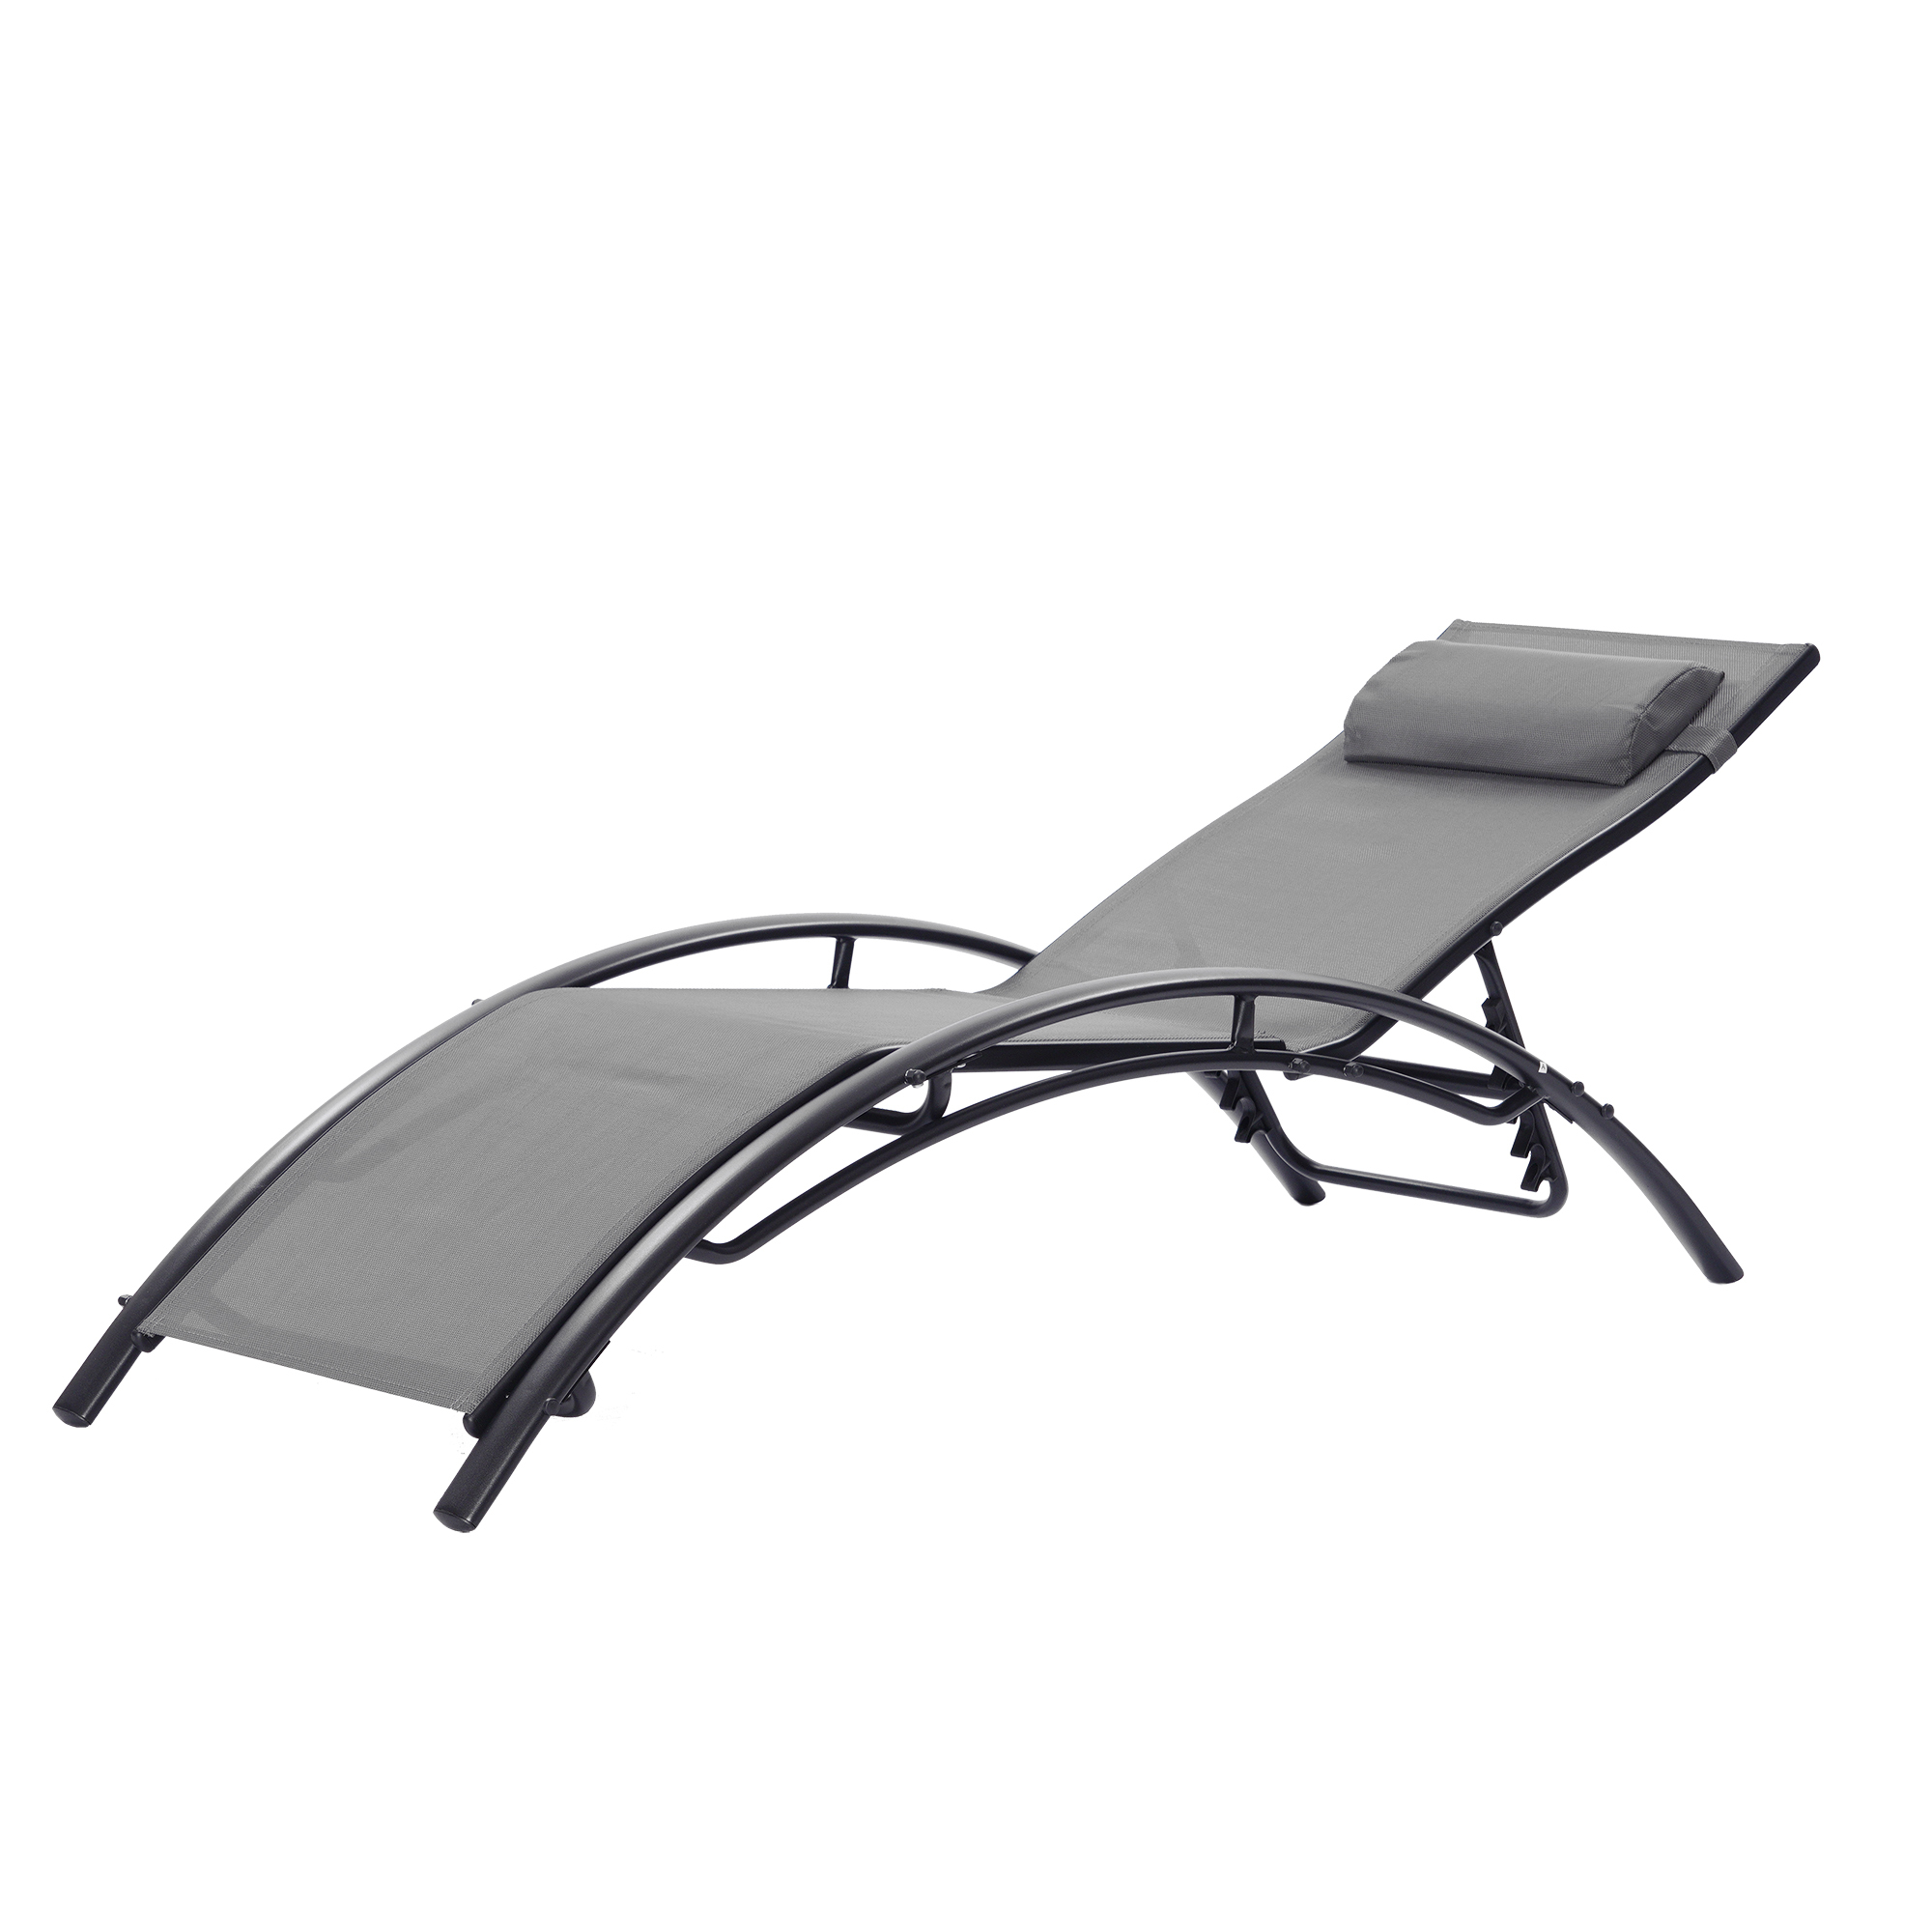 Hassch 2PCS Outdoor Chaise Lounges Aluminum Recliner Chair Beach Sun Chair, Gray - image 4 of 10